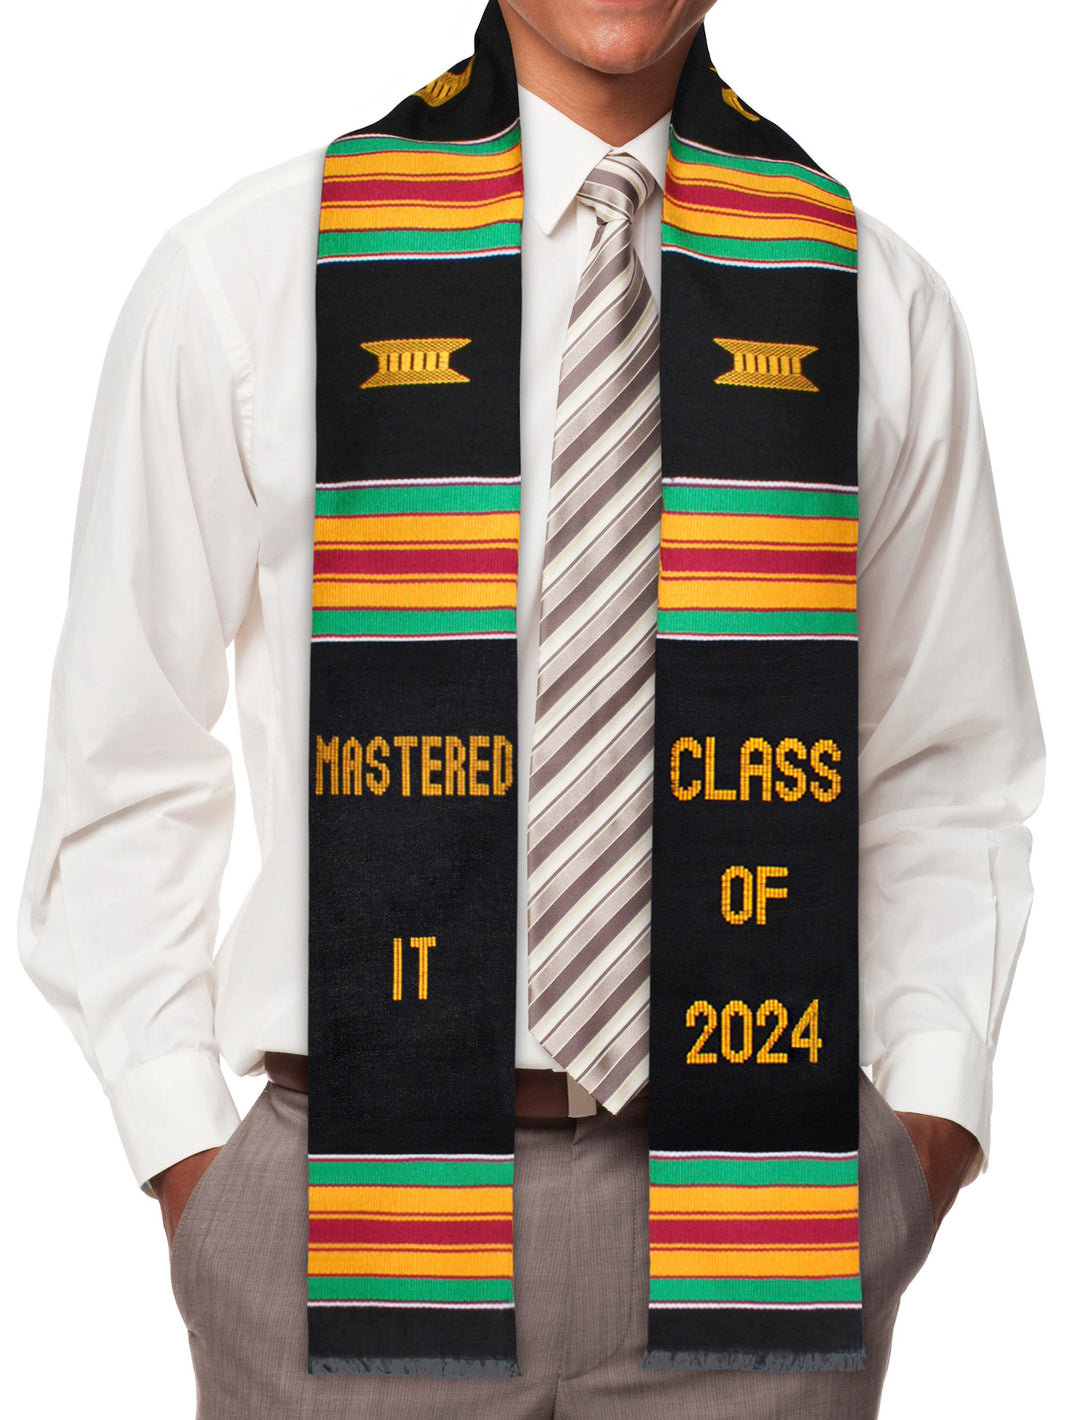 Mastered It Class of 2024 Kente Graduation Stole